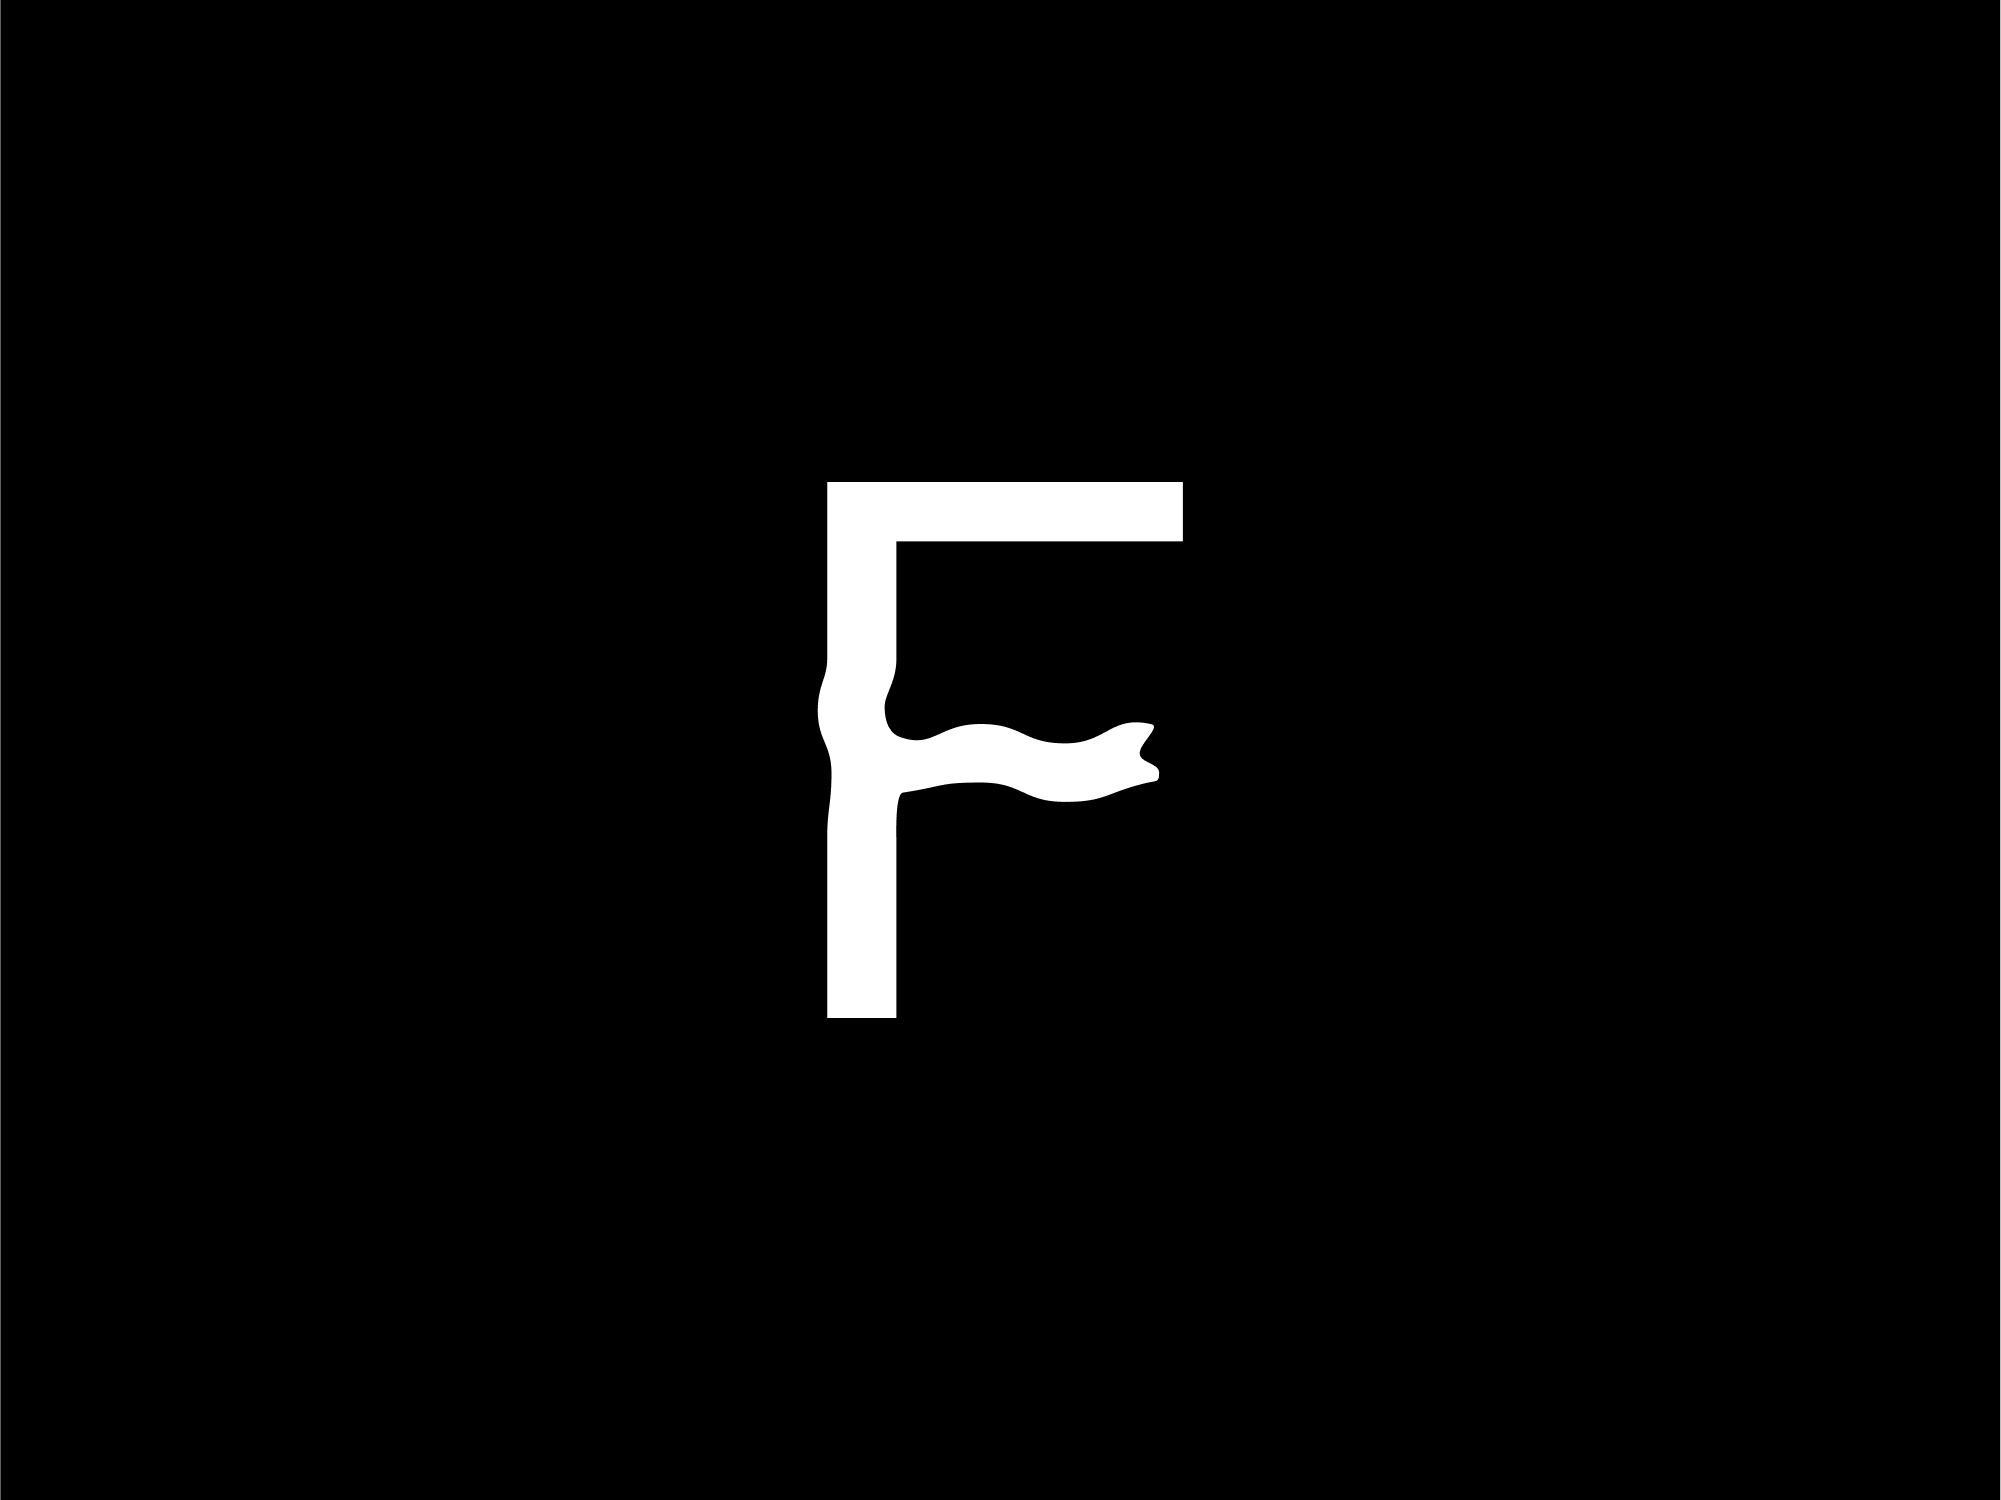 frequenhz letter mark